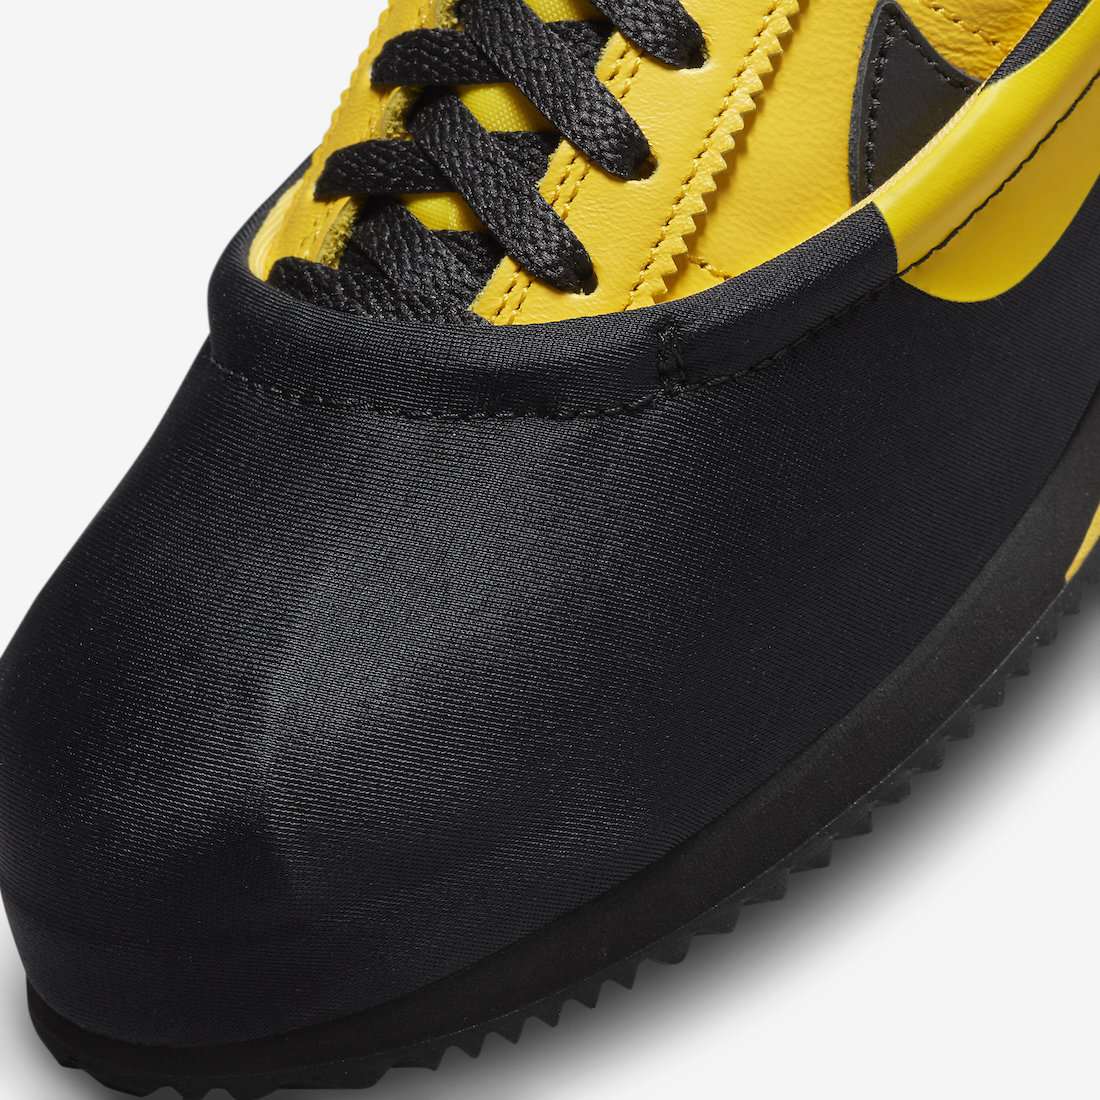 CLOT Nike Cortez Bruce Lee DZ3239 001 Release Date 6